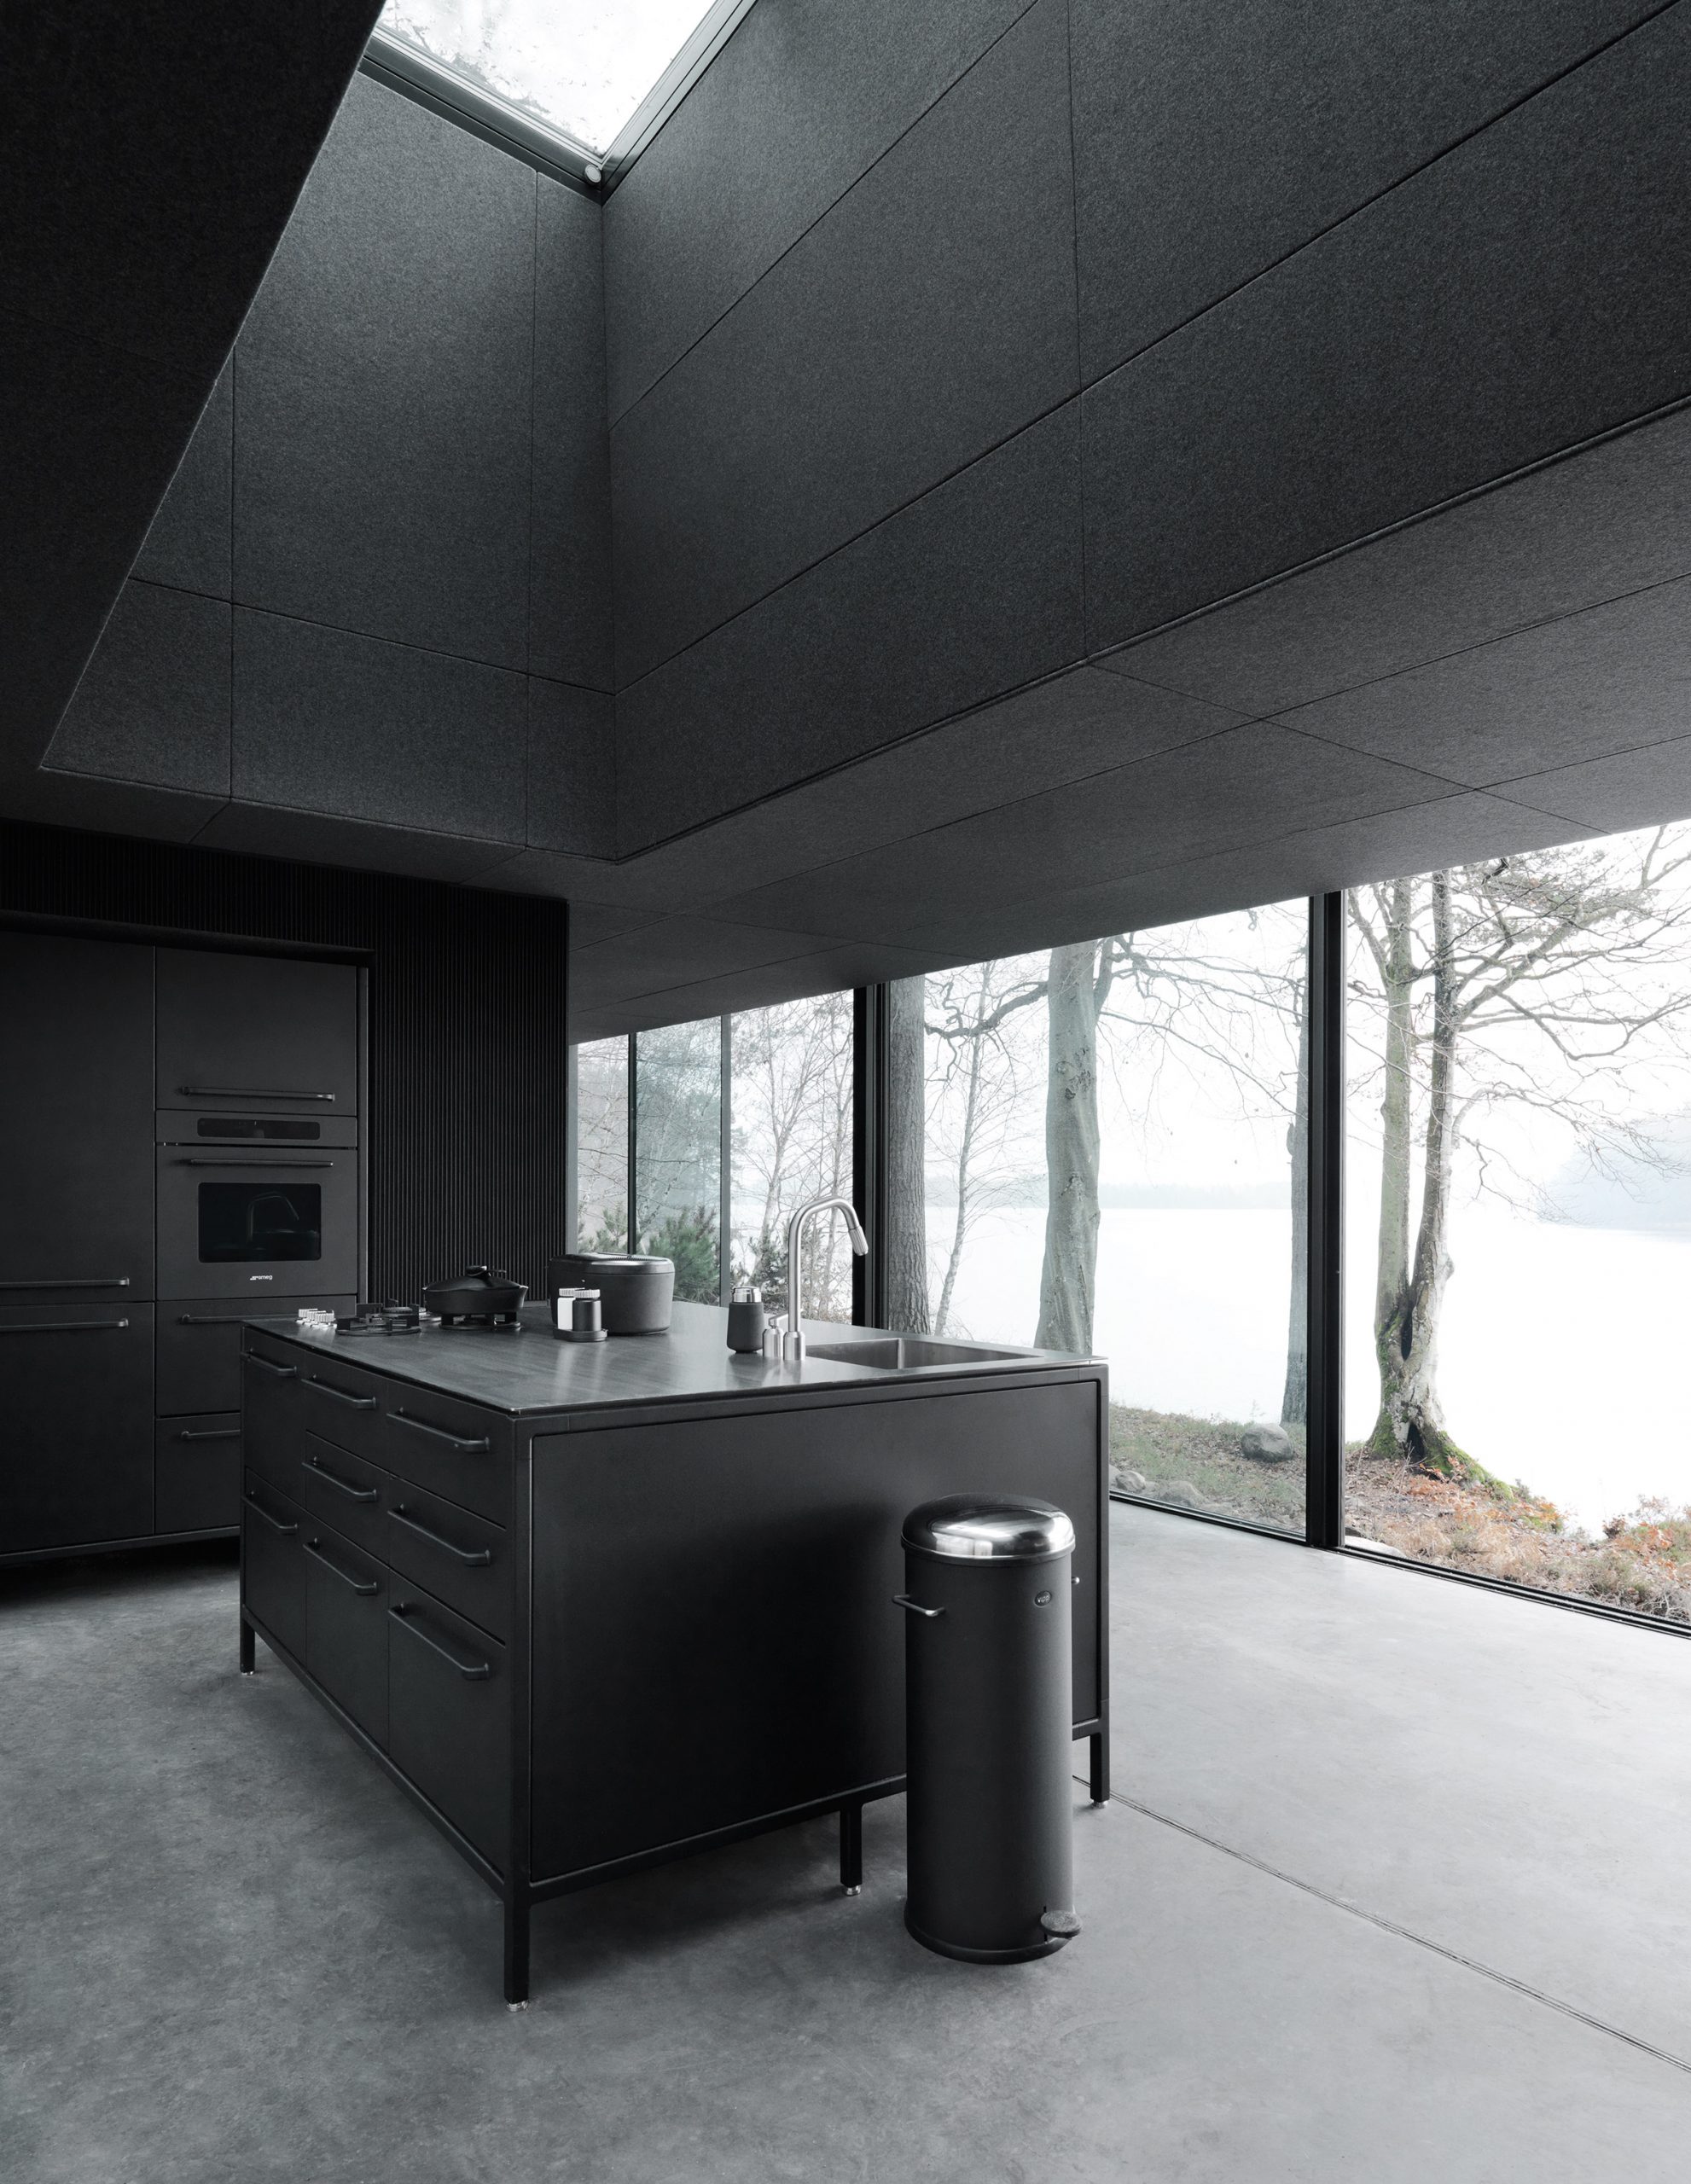 All-black kitchen in a prefab cabin